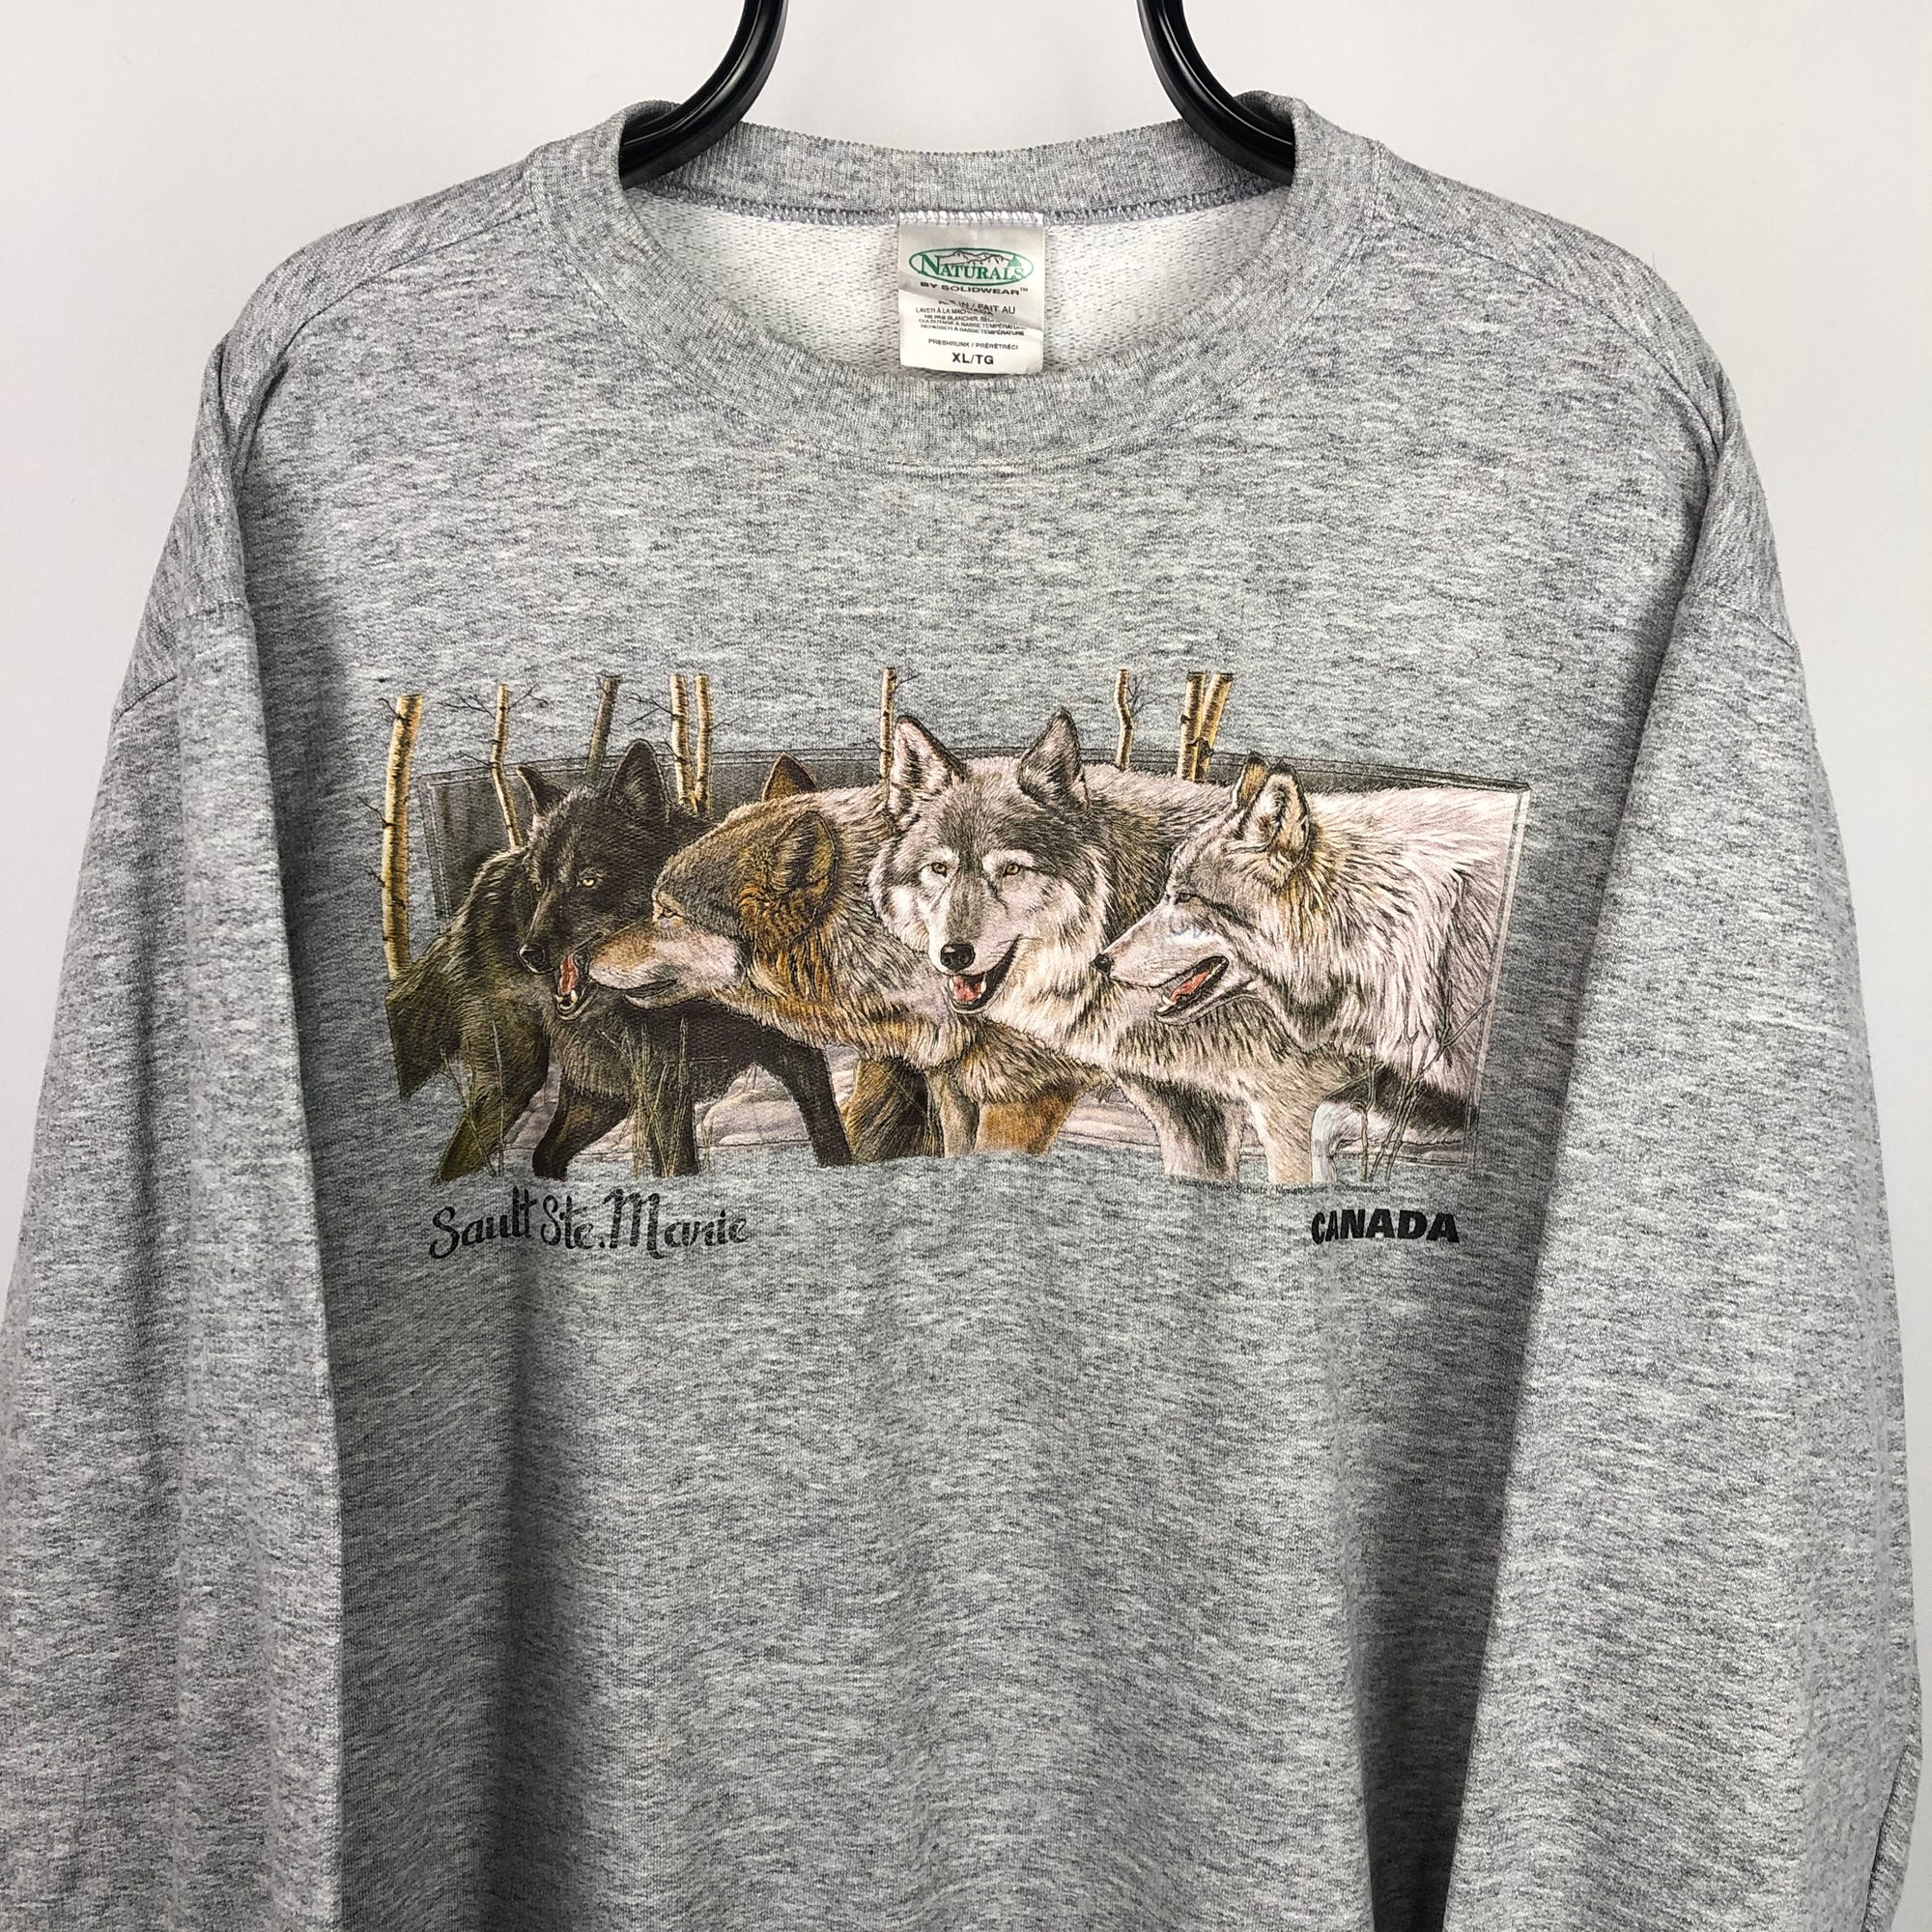 Vintage 90s Canada Wolves Sweatshirt in Grey - Men's Large/Women's XL